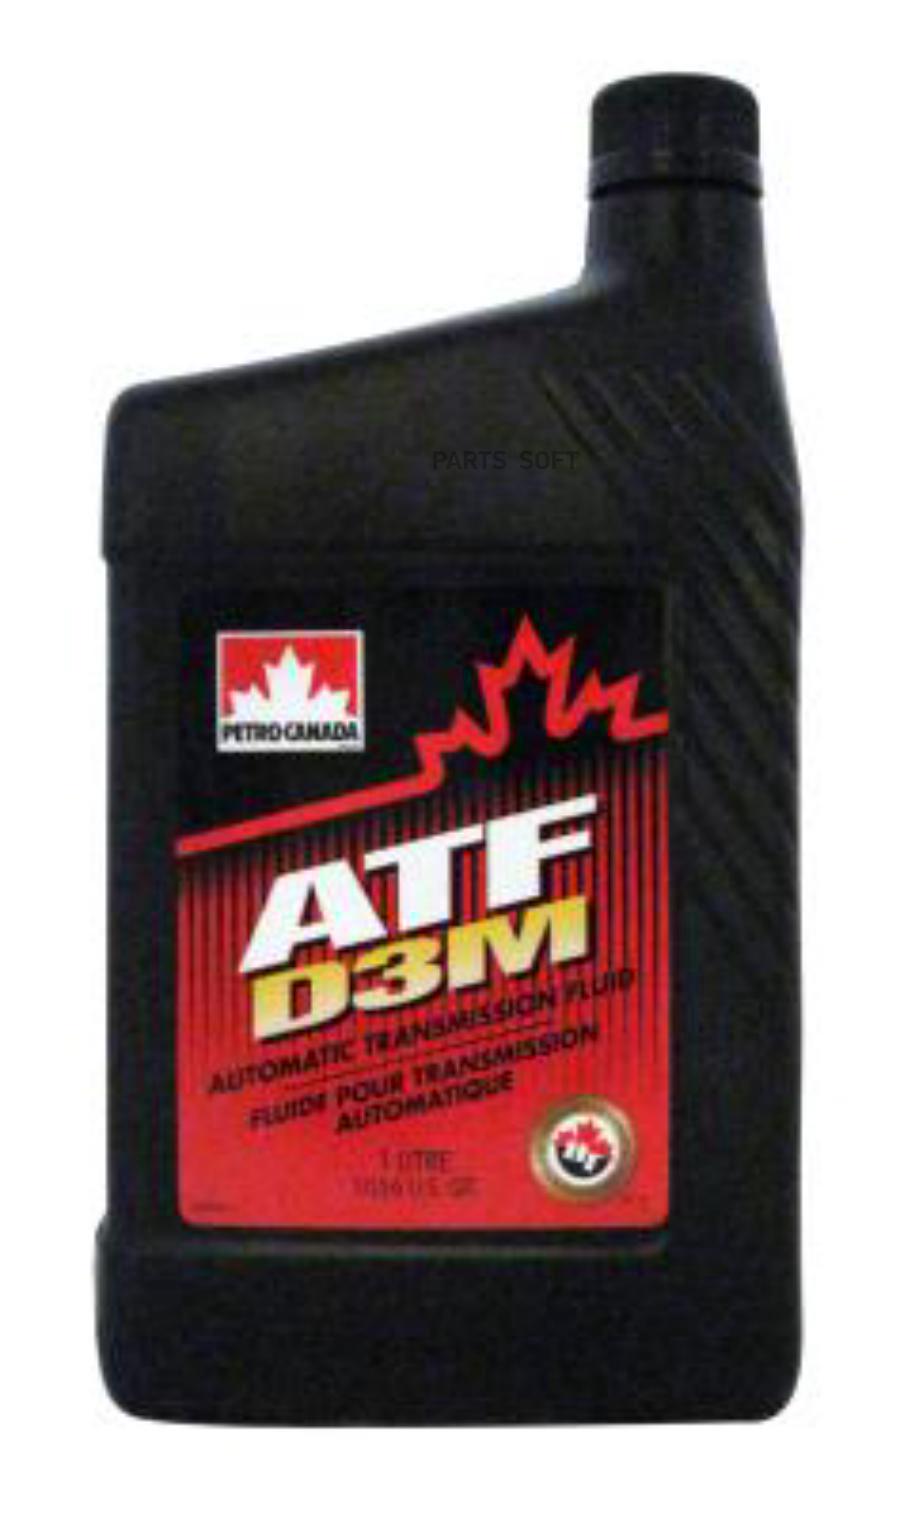 Canada atf. Petro-Canada ATF d3m. Petro-Canada ATF D-III (d3m). Petro Canada ATF 4+ артикул. Масло гидравлика Petro Canada ATF d3m.